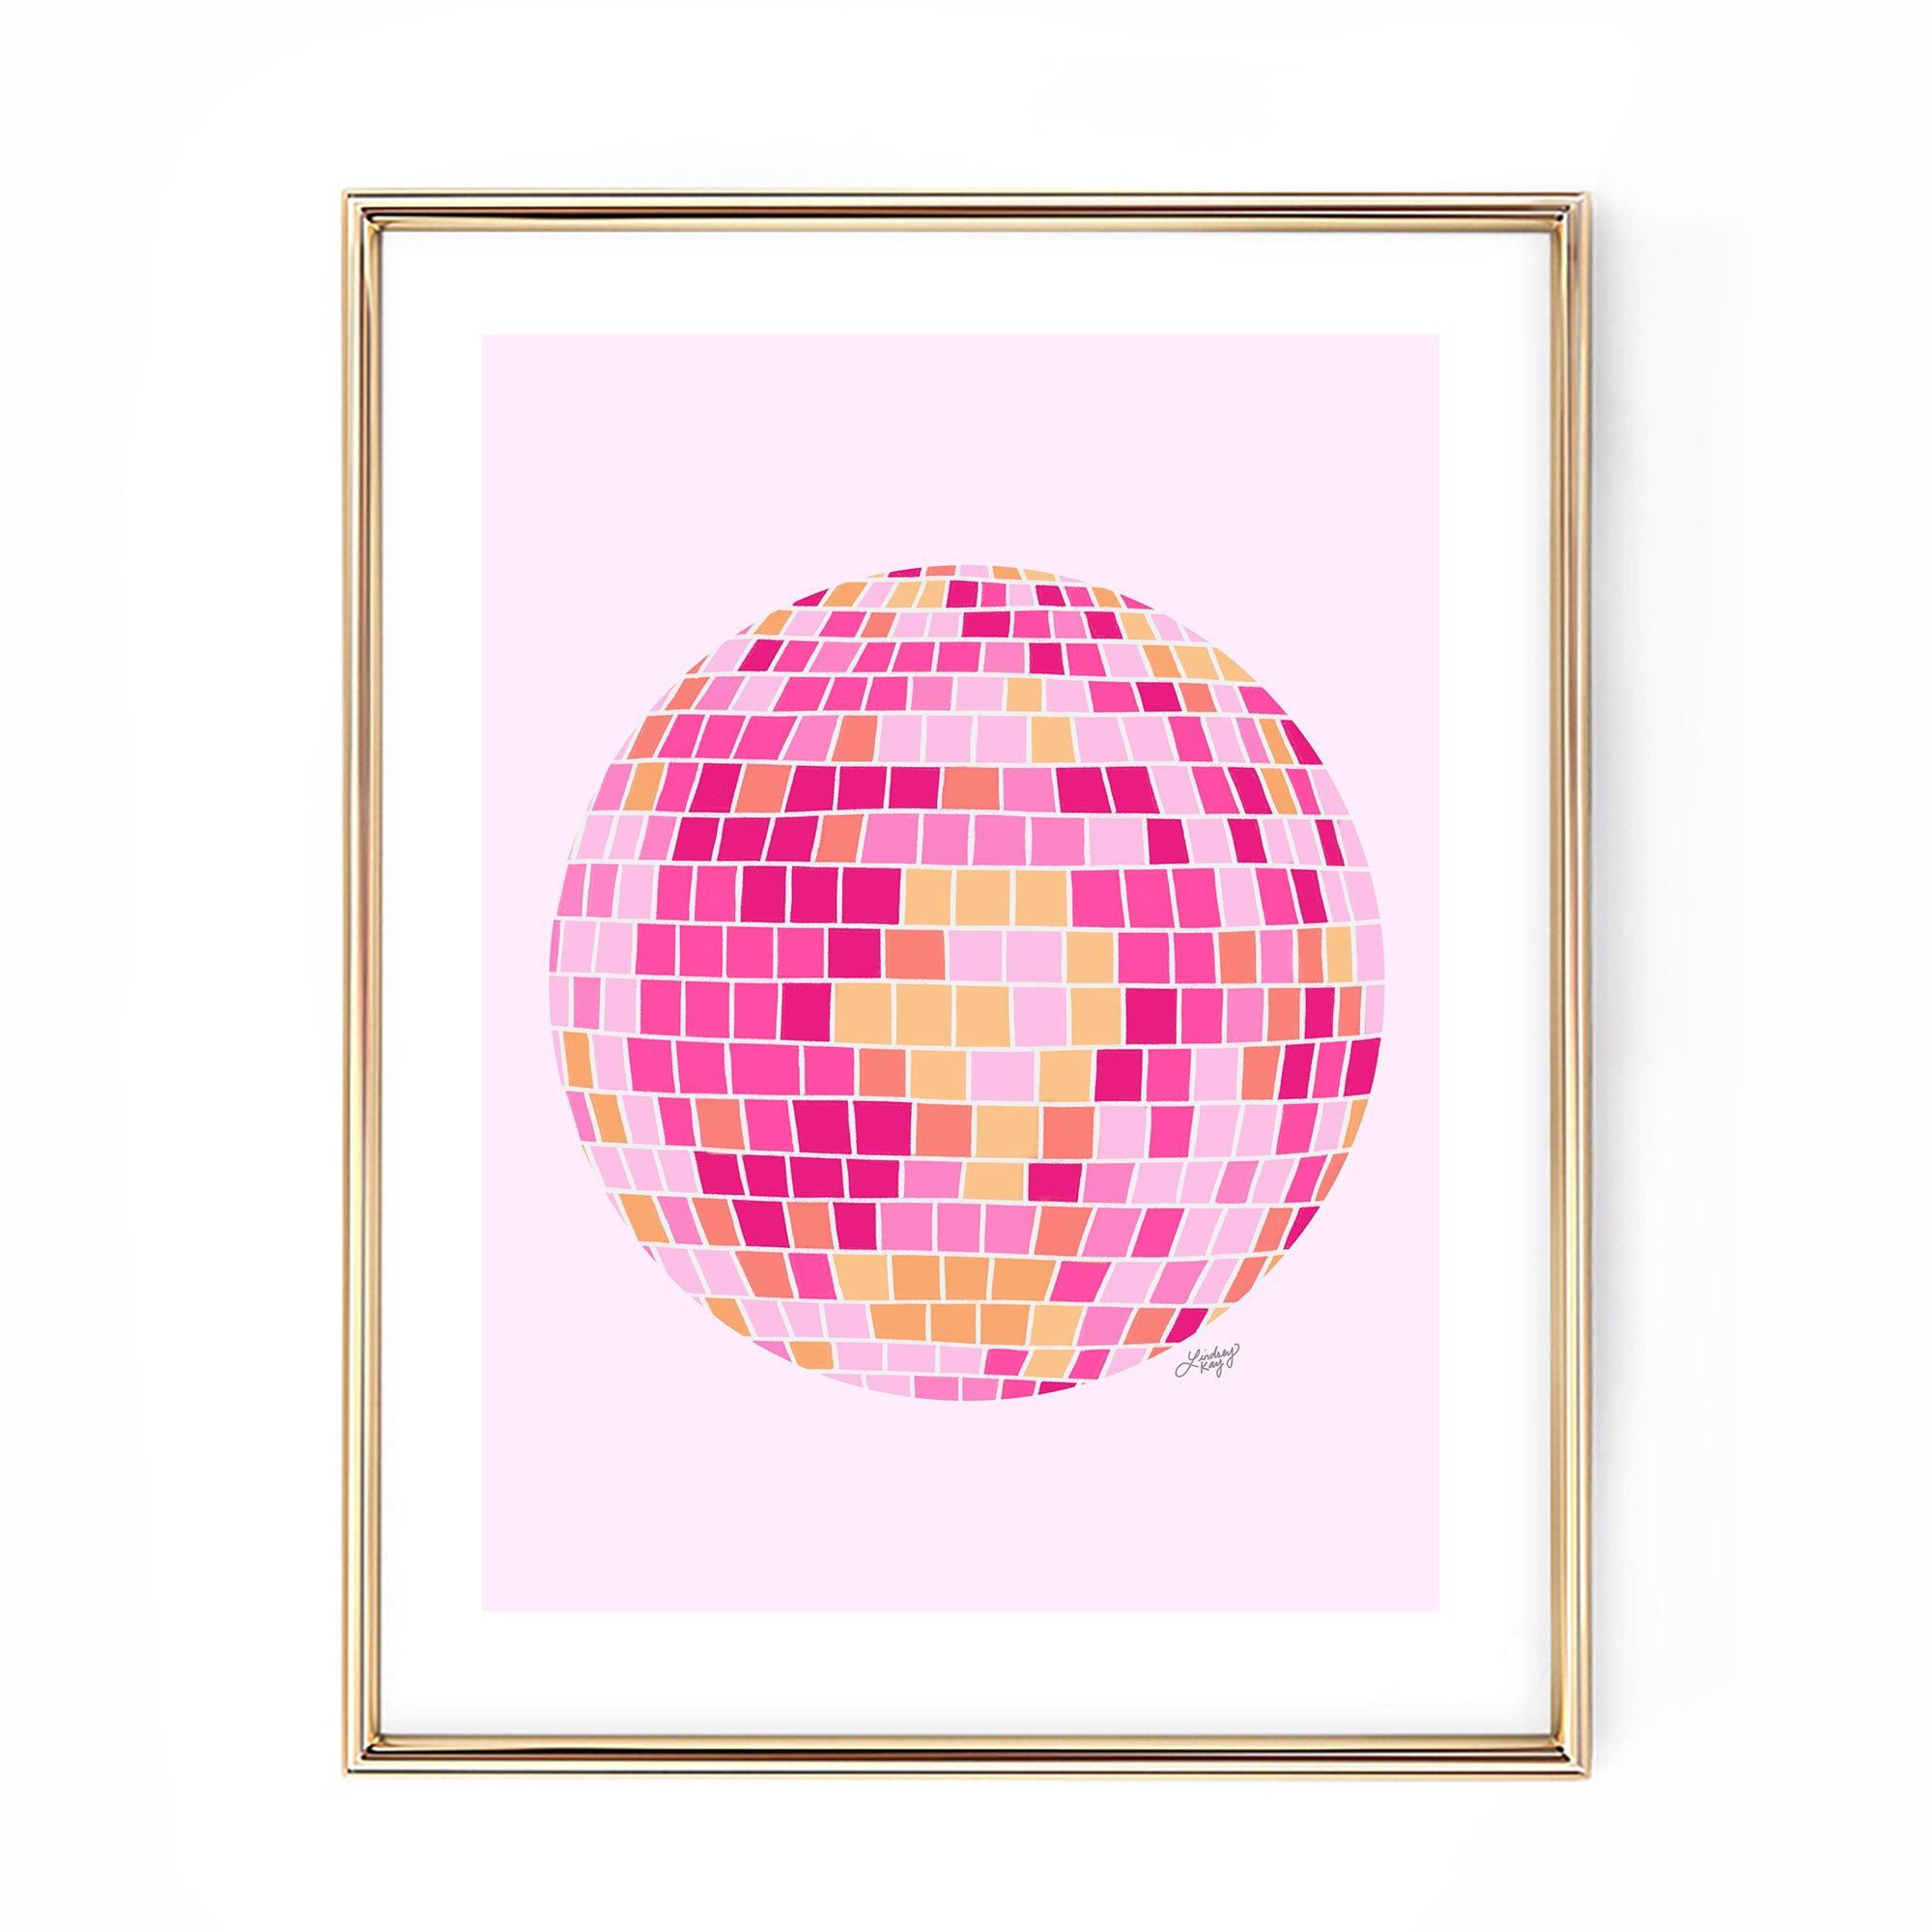 Disco Ball Wall Art, Pink Wall Art Trendy Retro, Trendy Disco Art